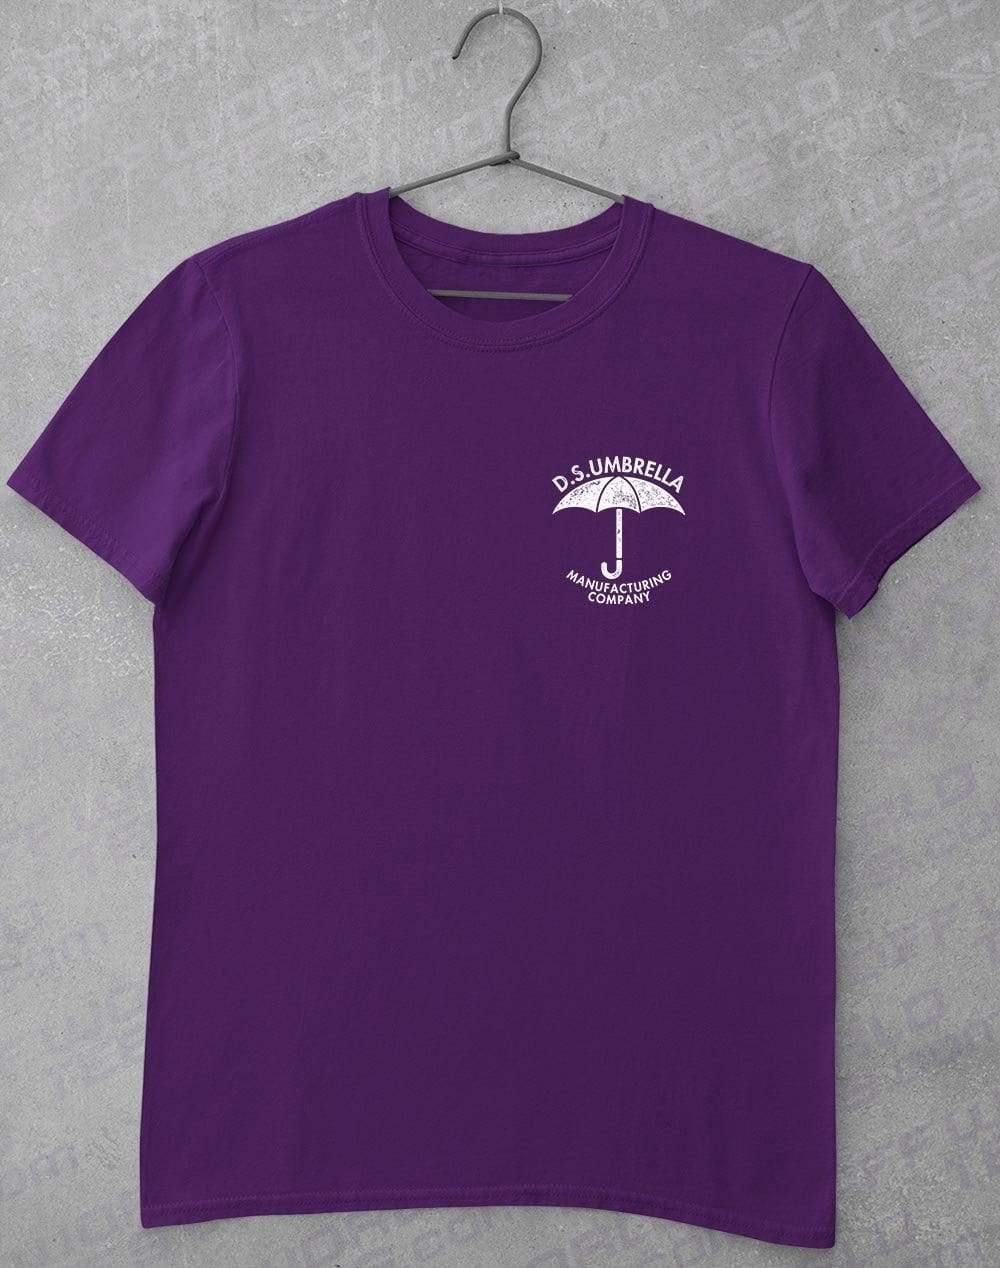 D.S. Umbrella T-Shirt S / Purple  - Off World Tees